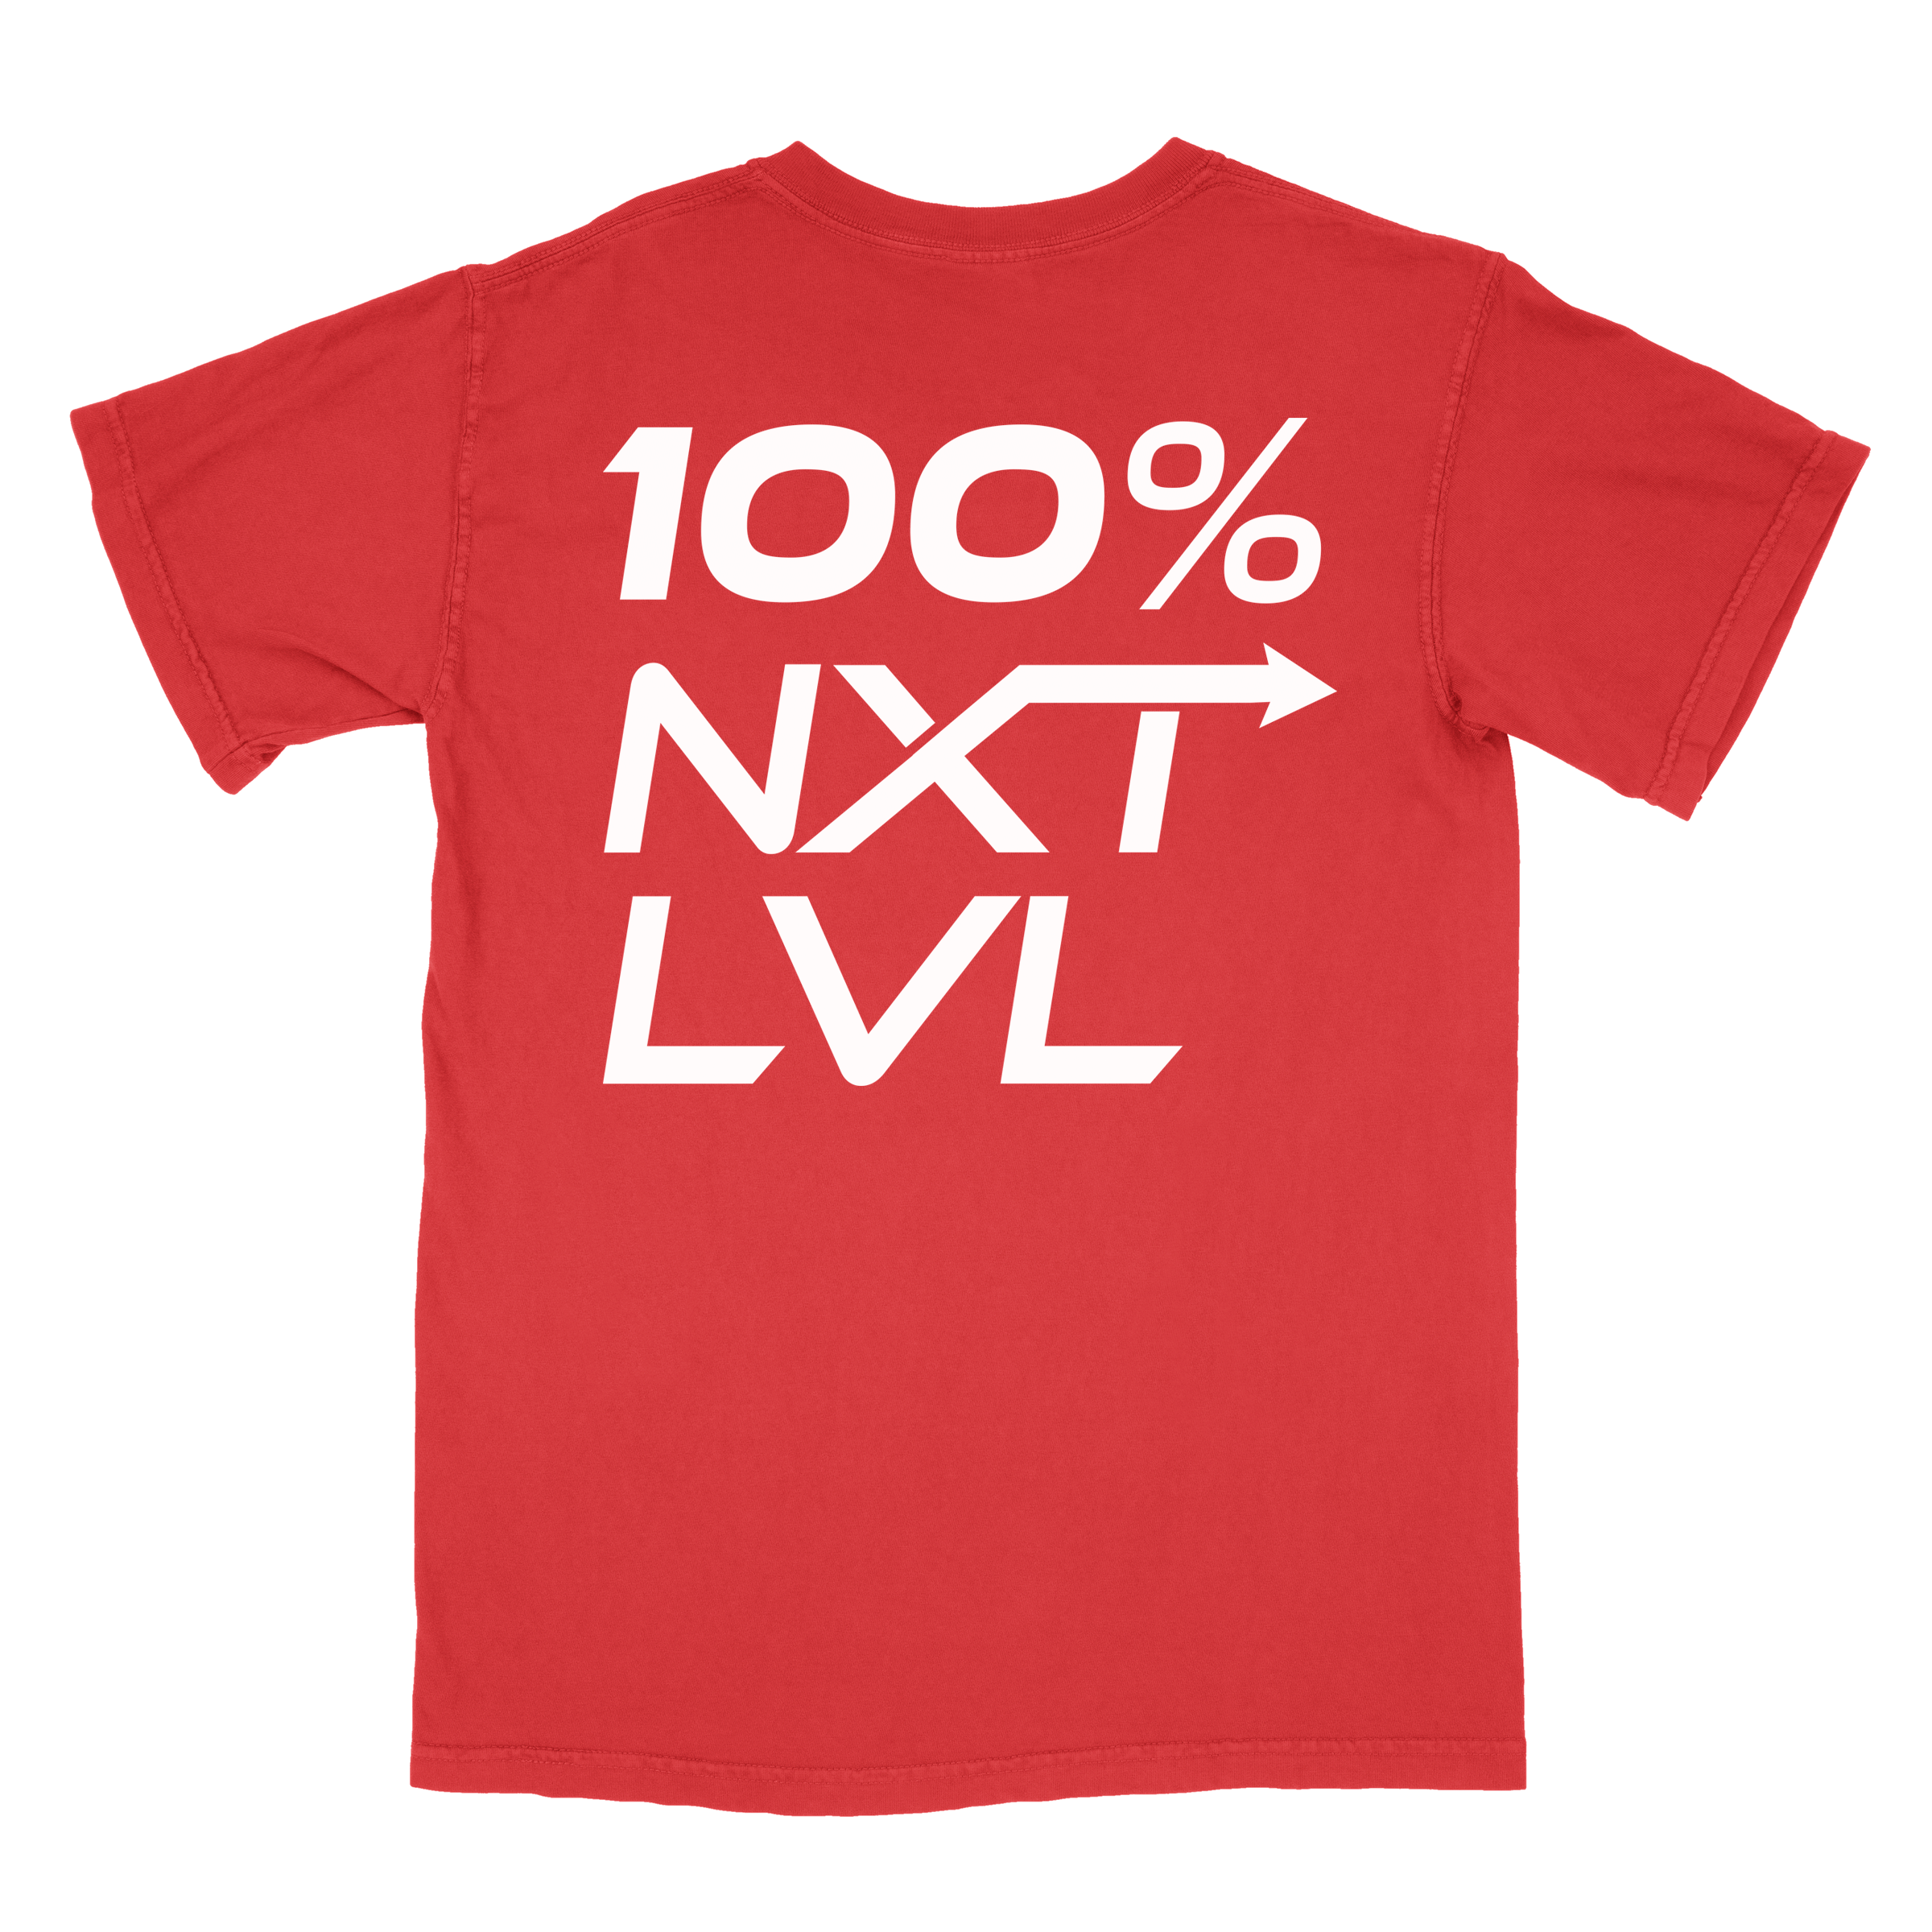 100% NXT LVL Tee- Red